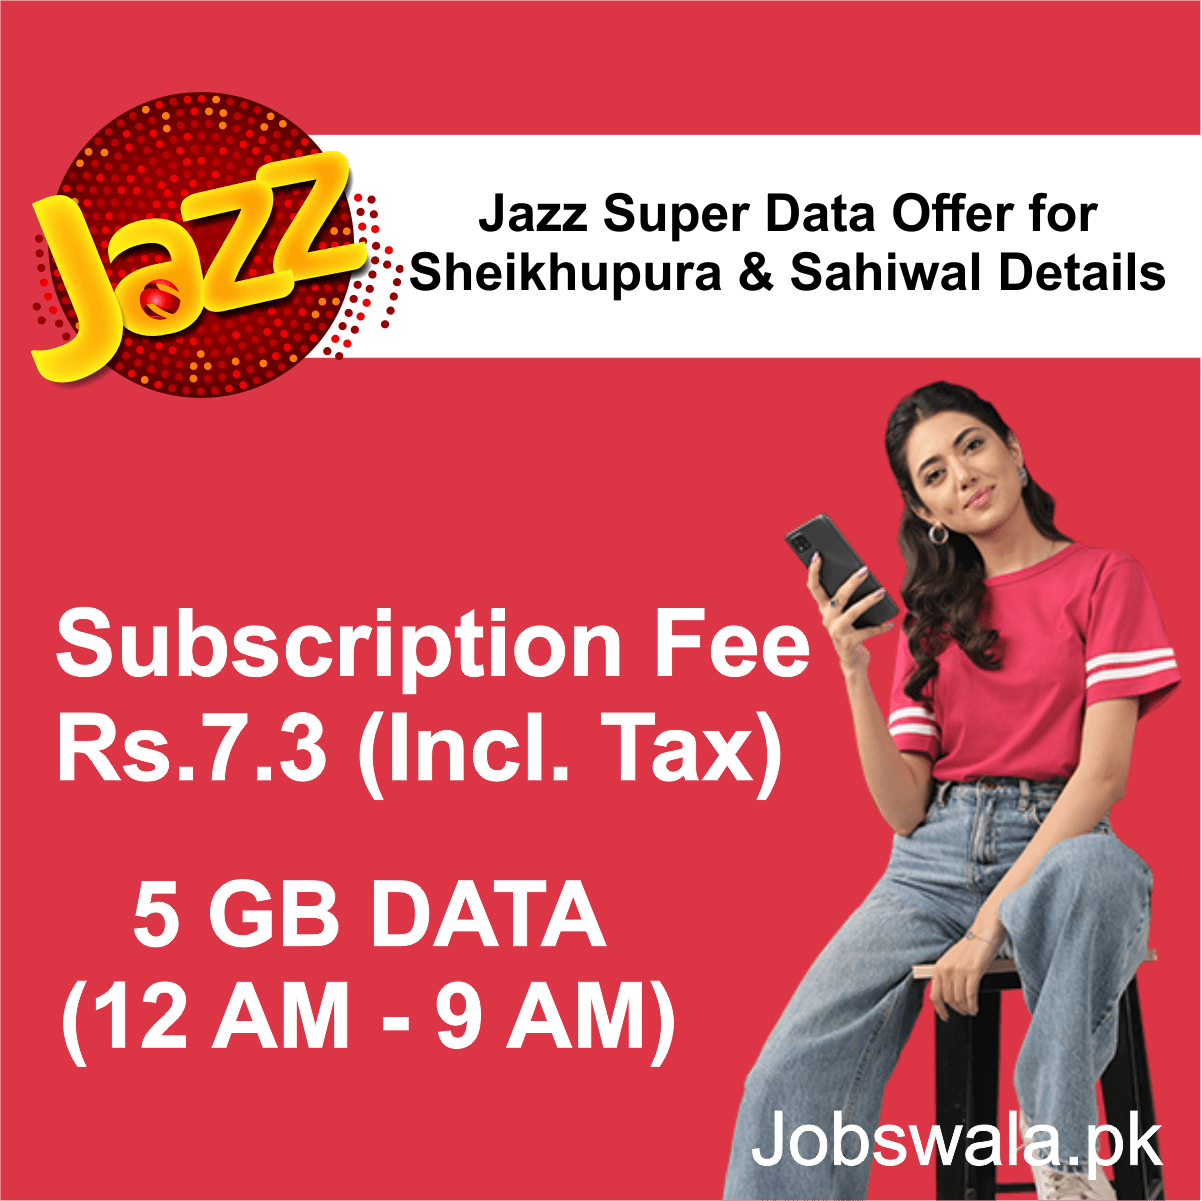 Jazz Super Data Offer for Sheikhupura & Sahiwal